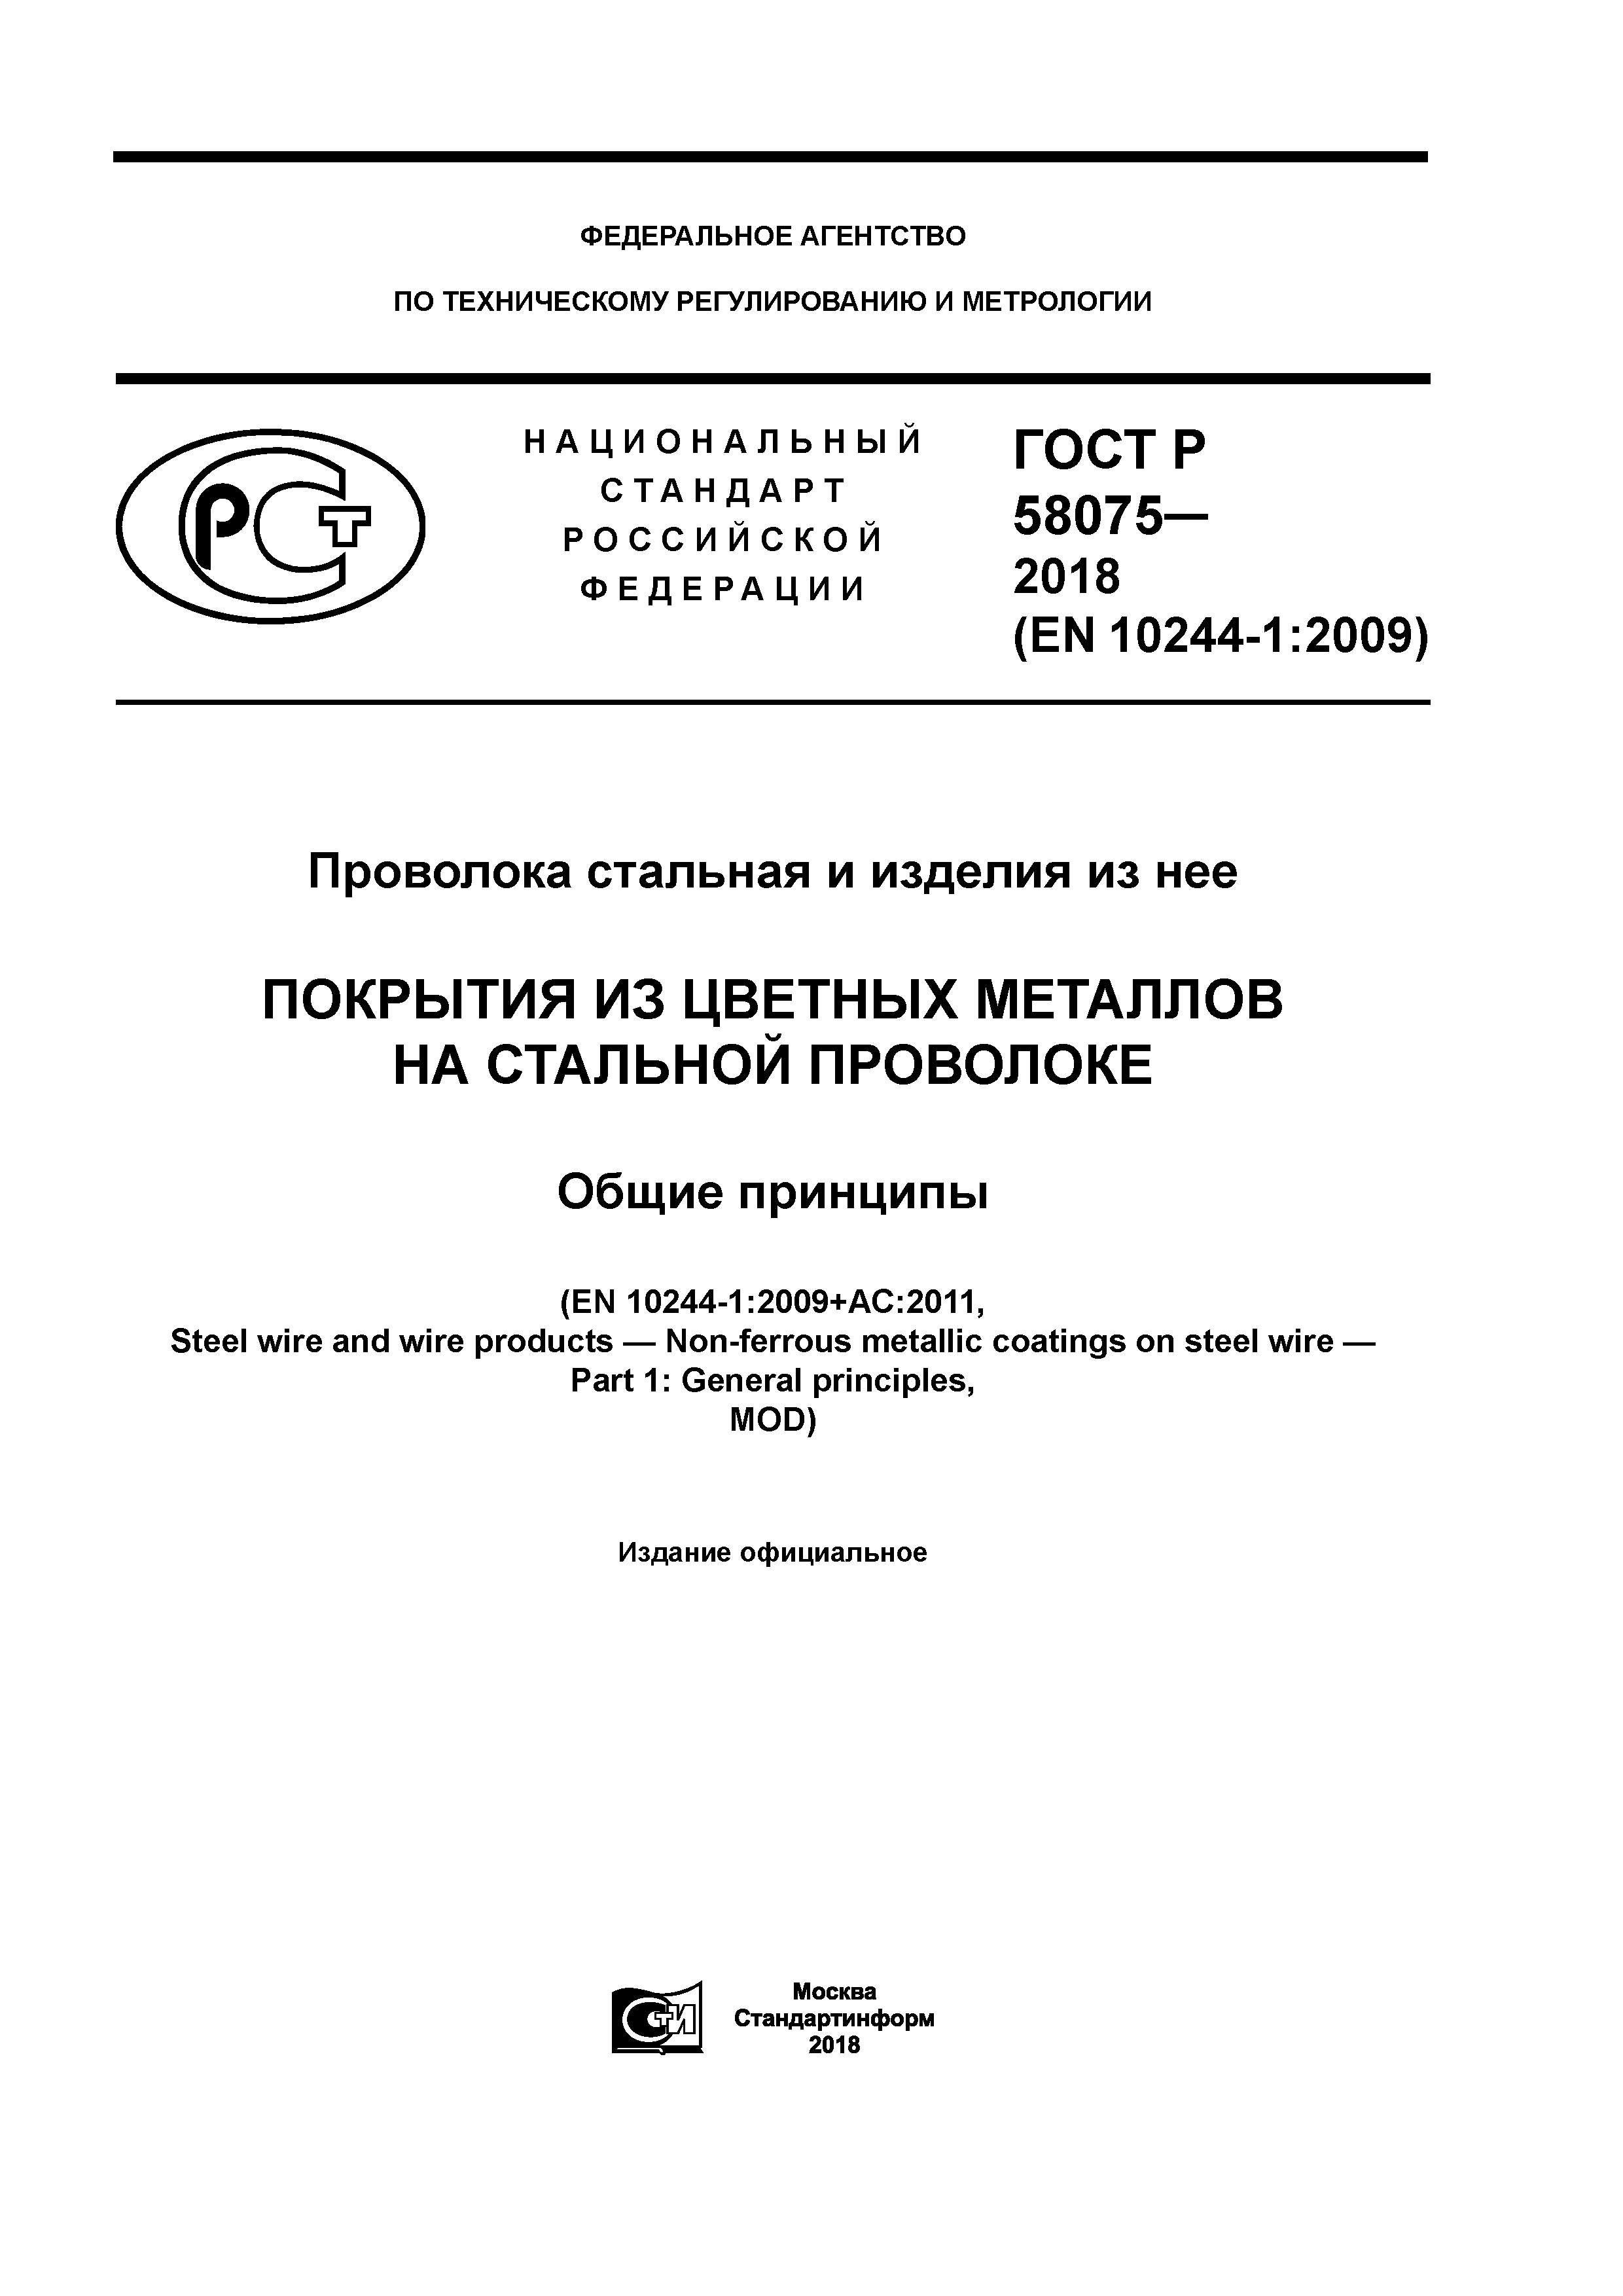 ГОСТ Р 58075-2018